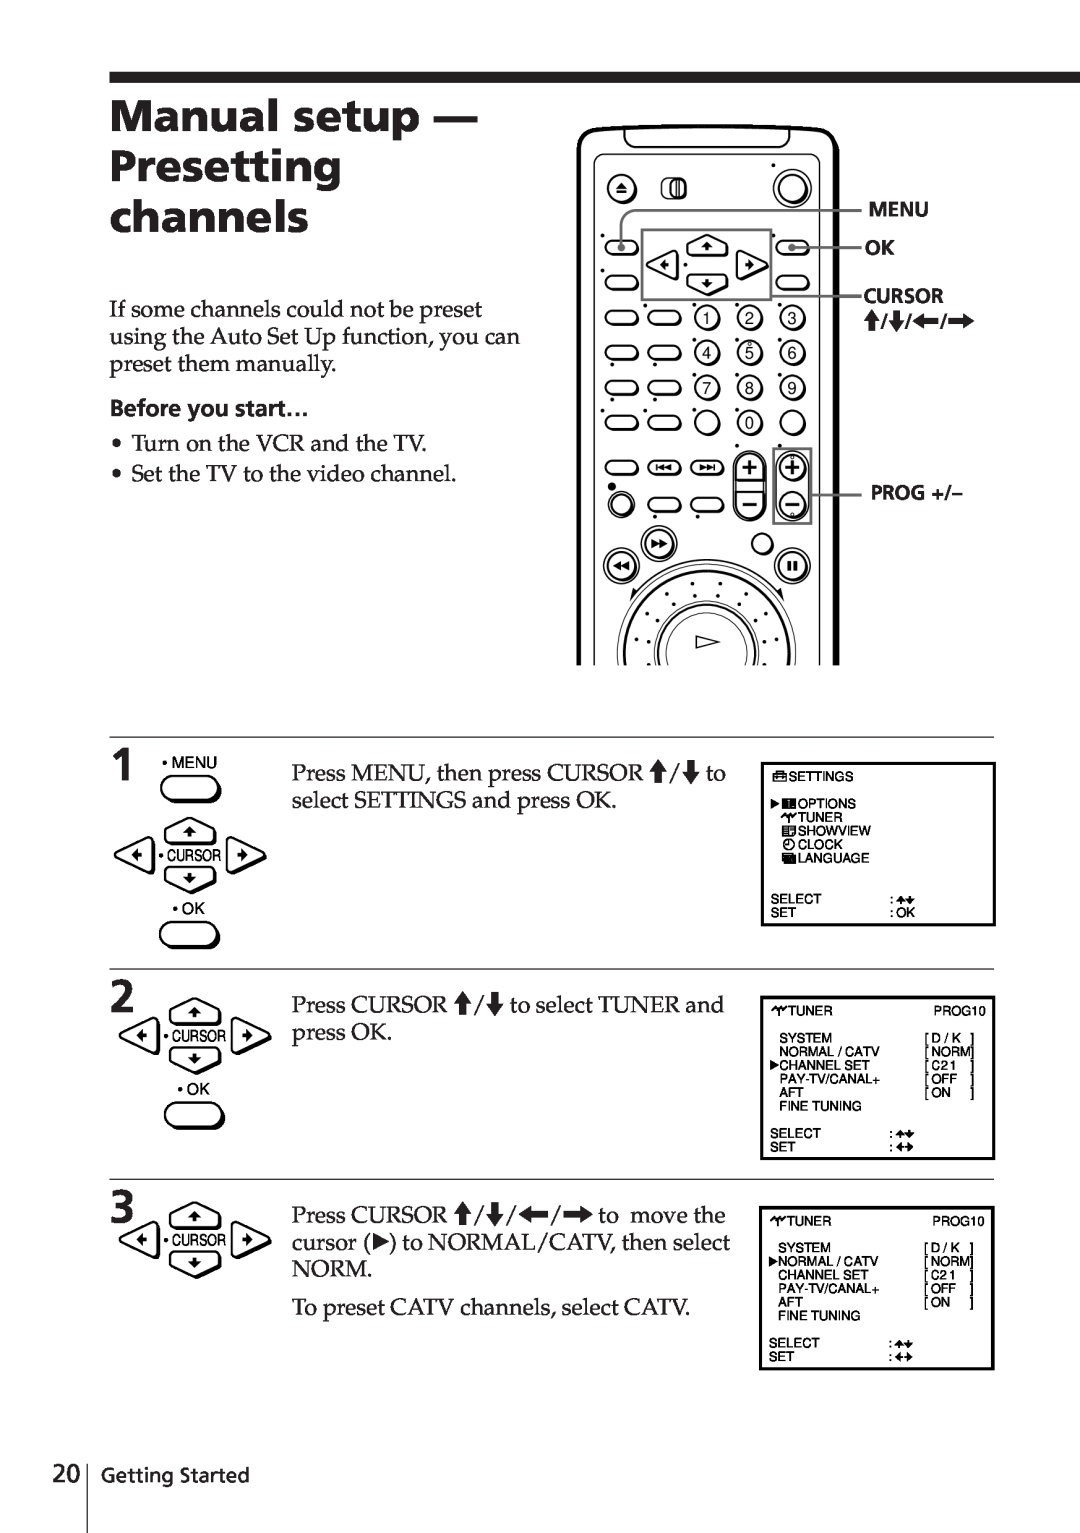 Sony SLV-E580EG manual Manual setup - Presetting channels, Before you start… 